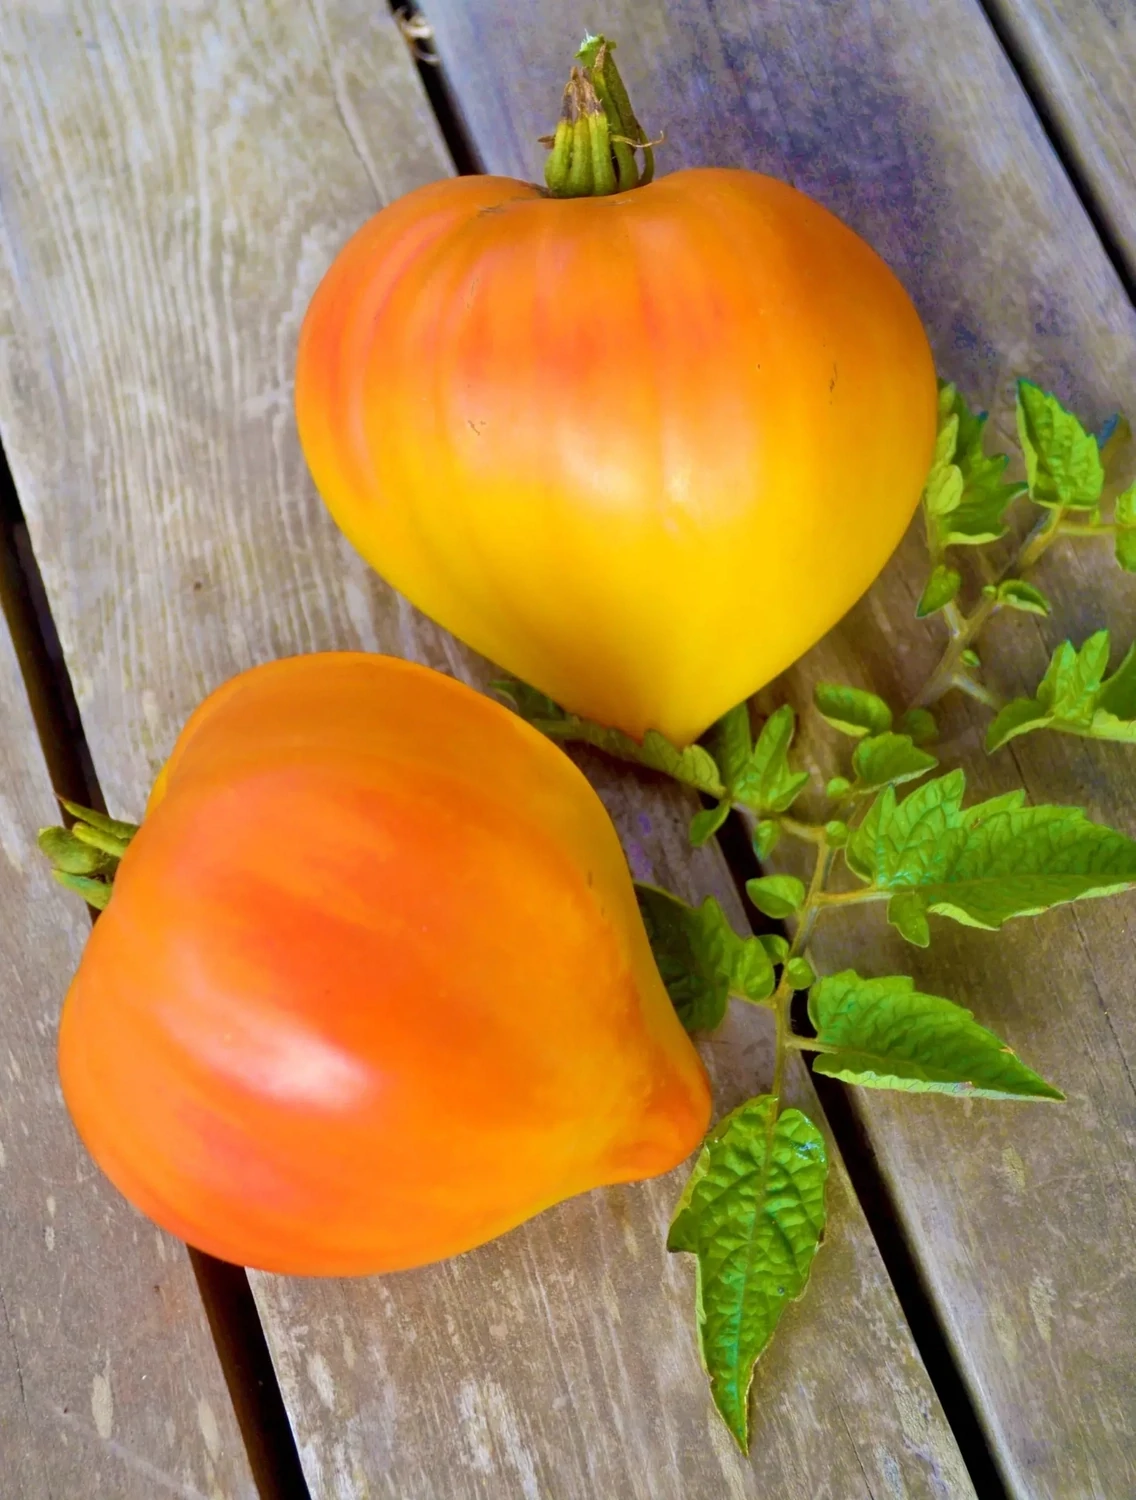 Golden King of Sibera Tomato (Seed Freaks)